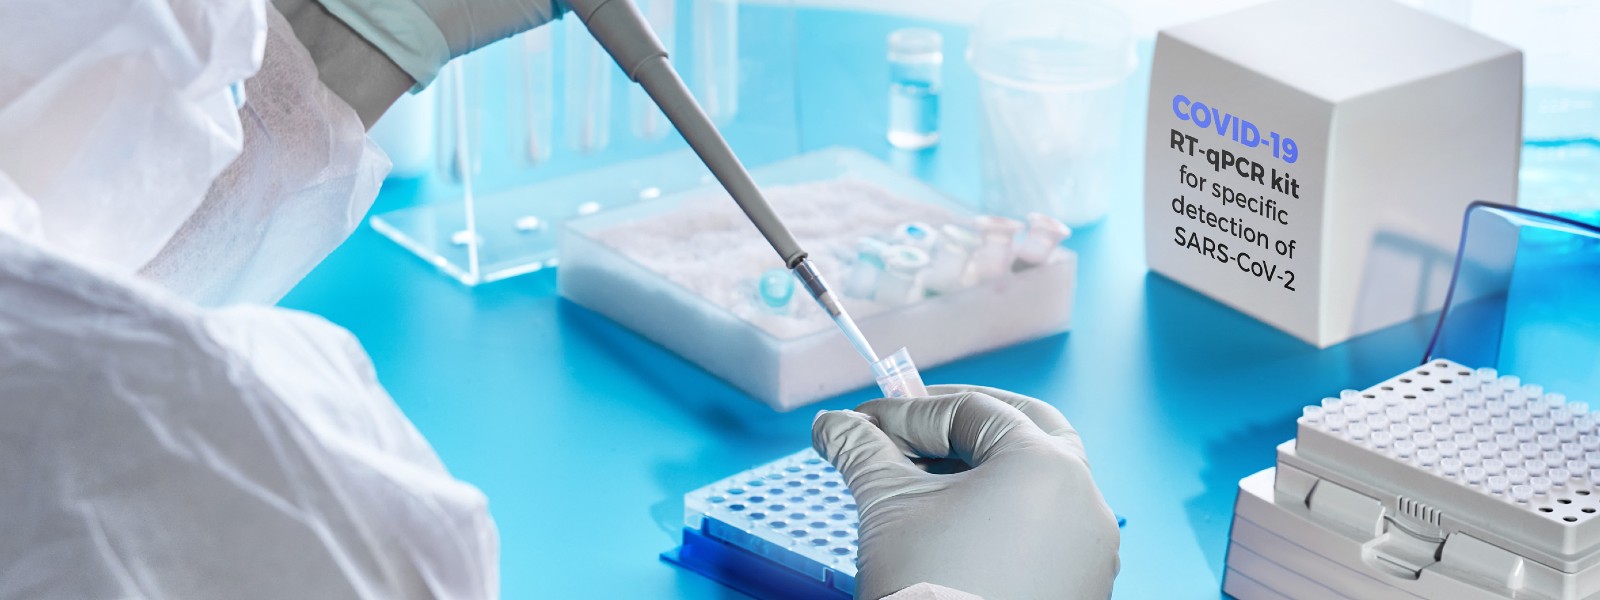 Sri Lanka to boost its PCR testing capacity to combat COVID-19